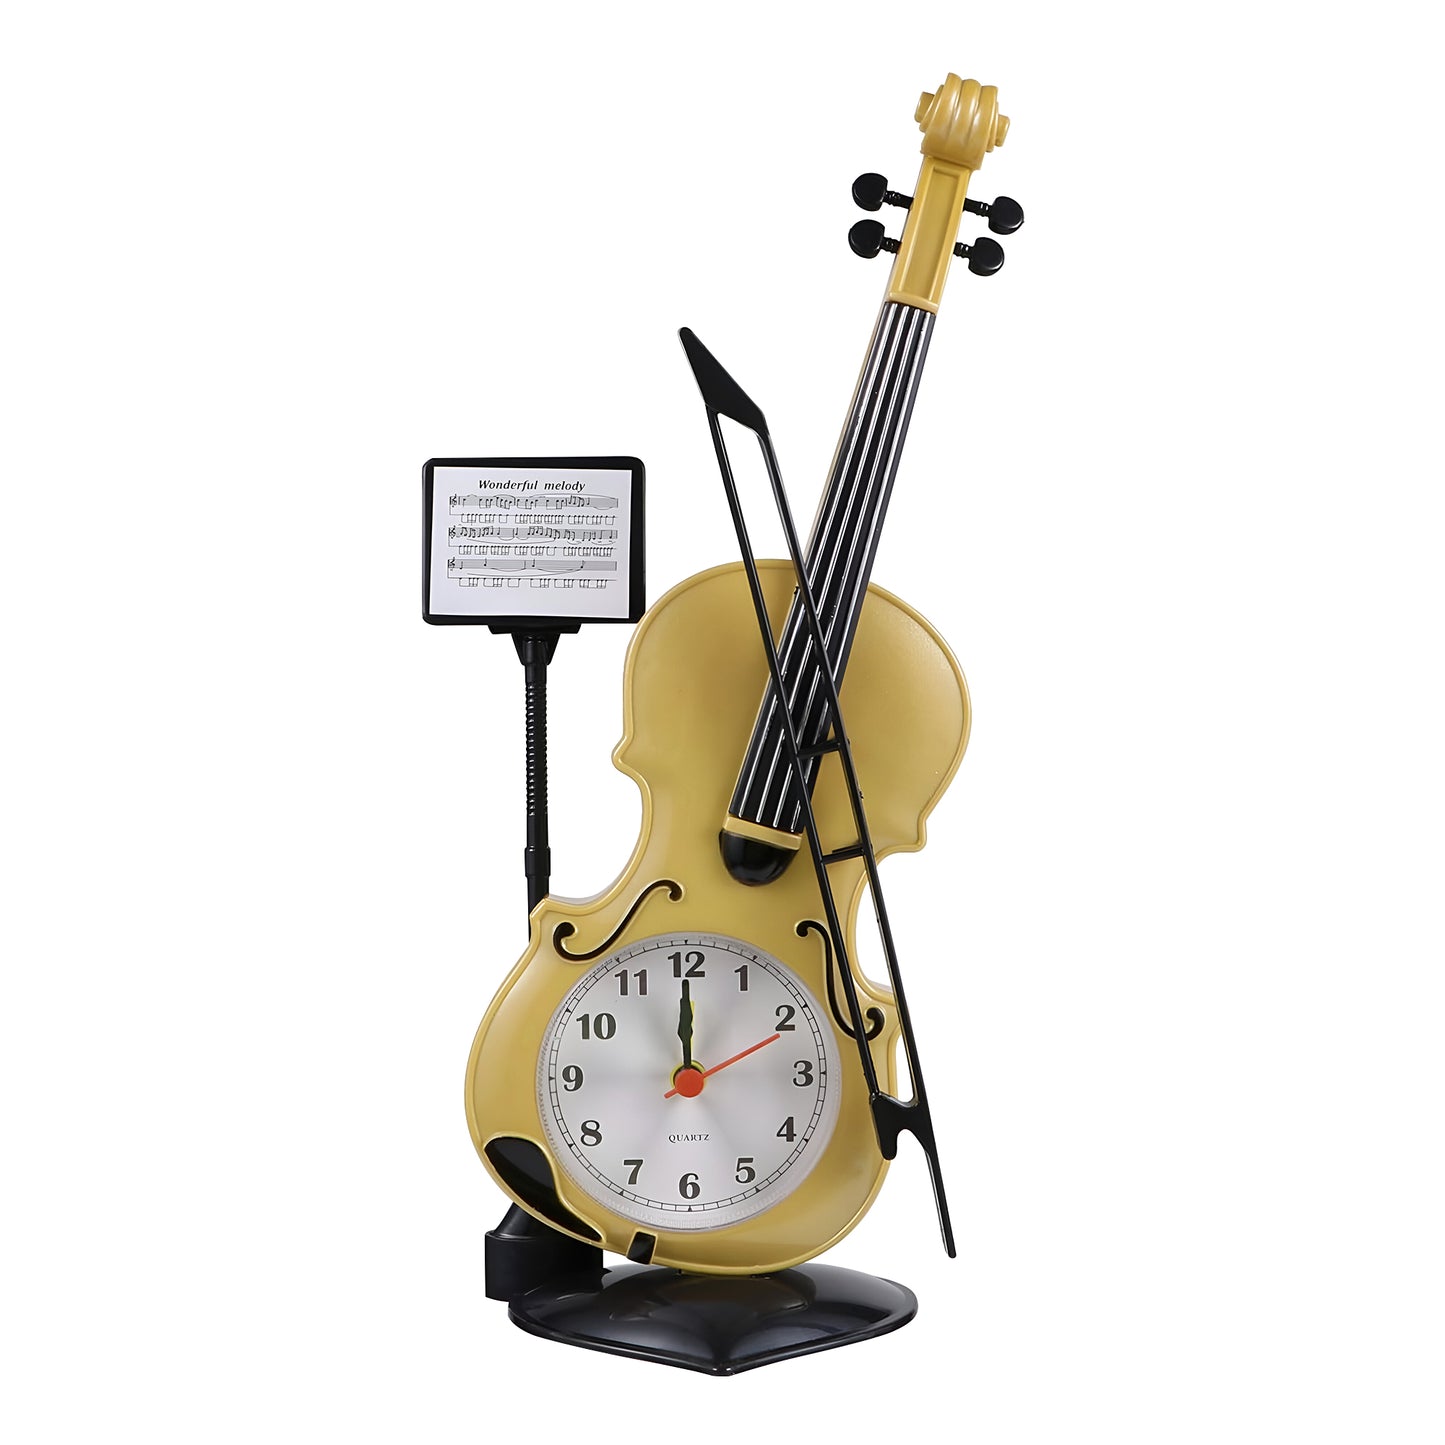 Violin Model Desk Decorations Decorative Table Alarm Clocks ~3517